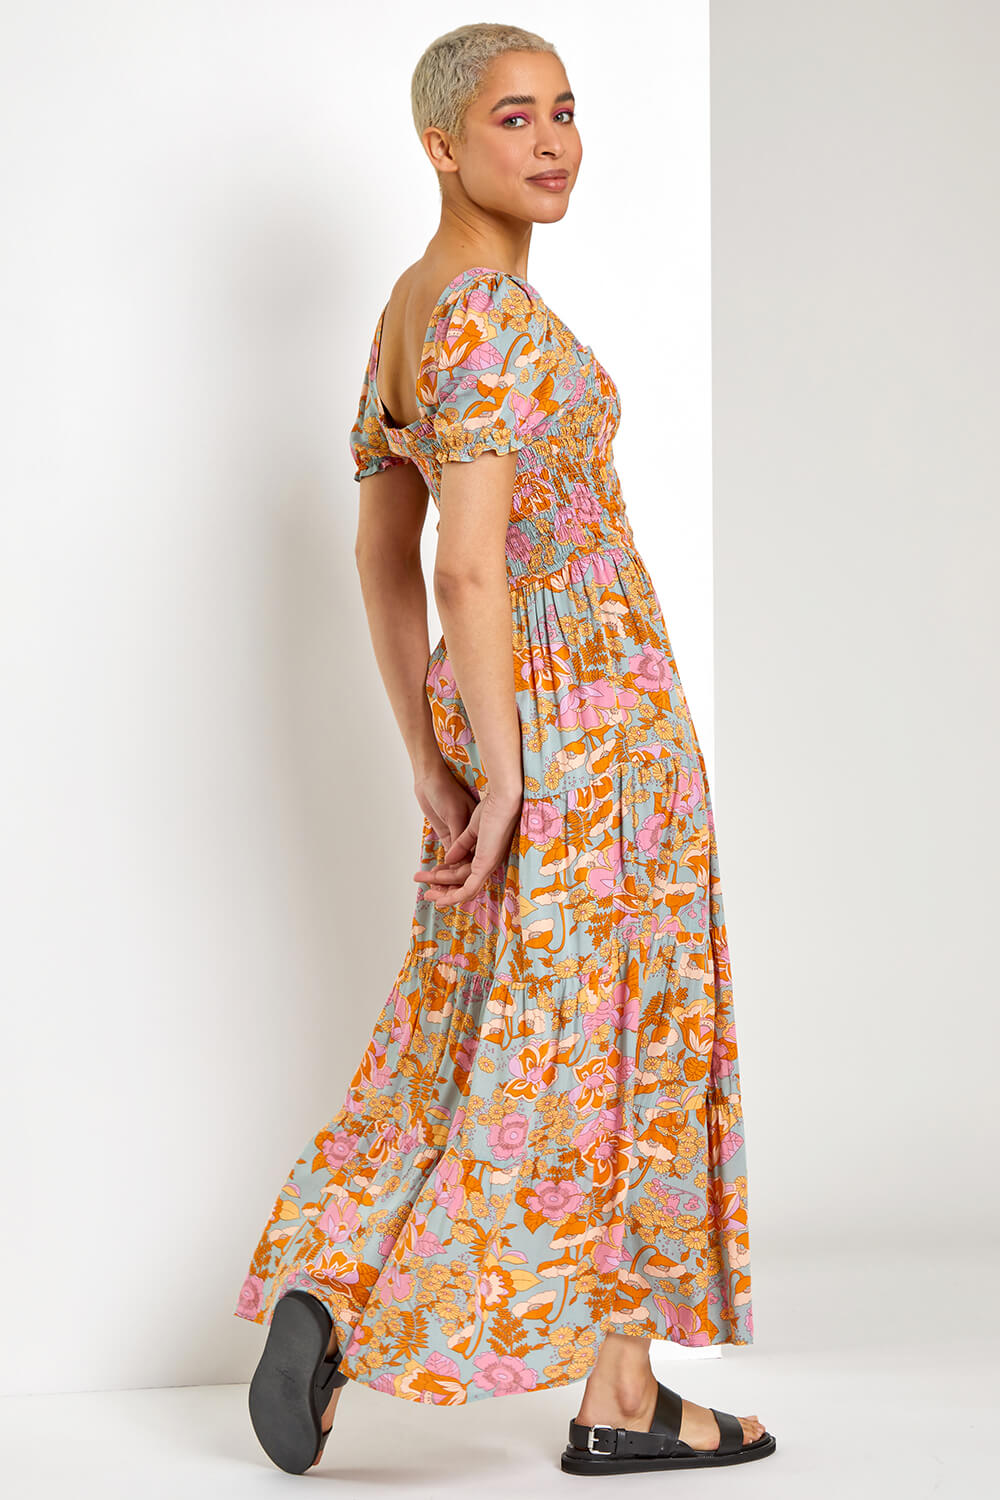 ORANGE Retro Floral Print Tiered Maxi Dress, Image 3 of 5